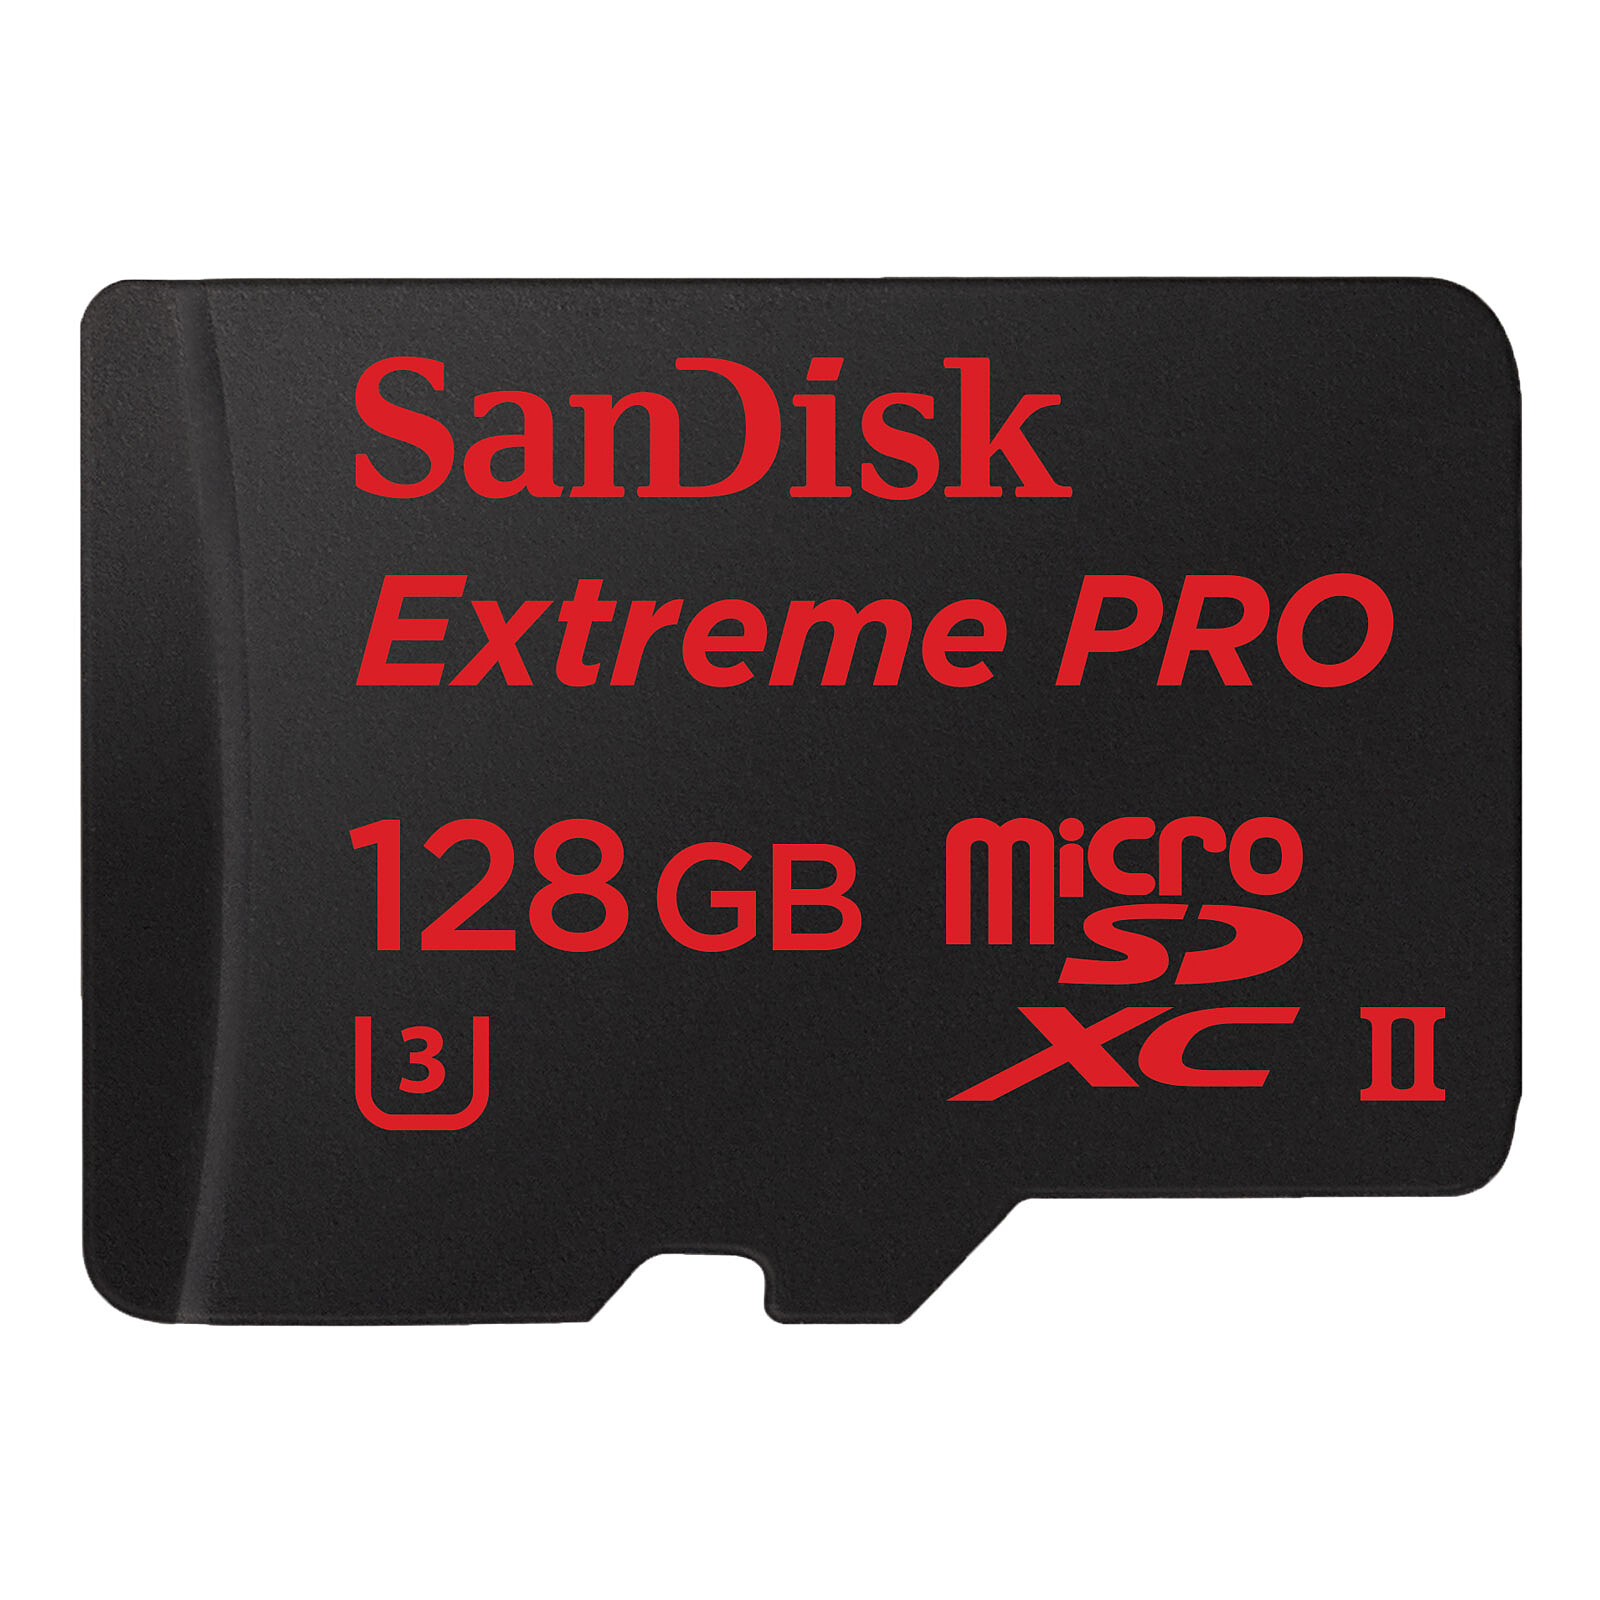 SanDisk CARTE MÉMOIRE SD EXTREME PRO SDXC UHS-I SANDISK 64 GO  (SDSDXXU-064G-GN4IN) - Prix pas cher